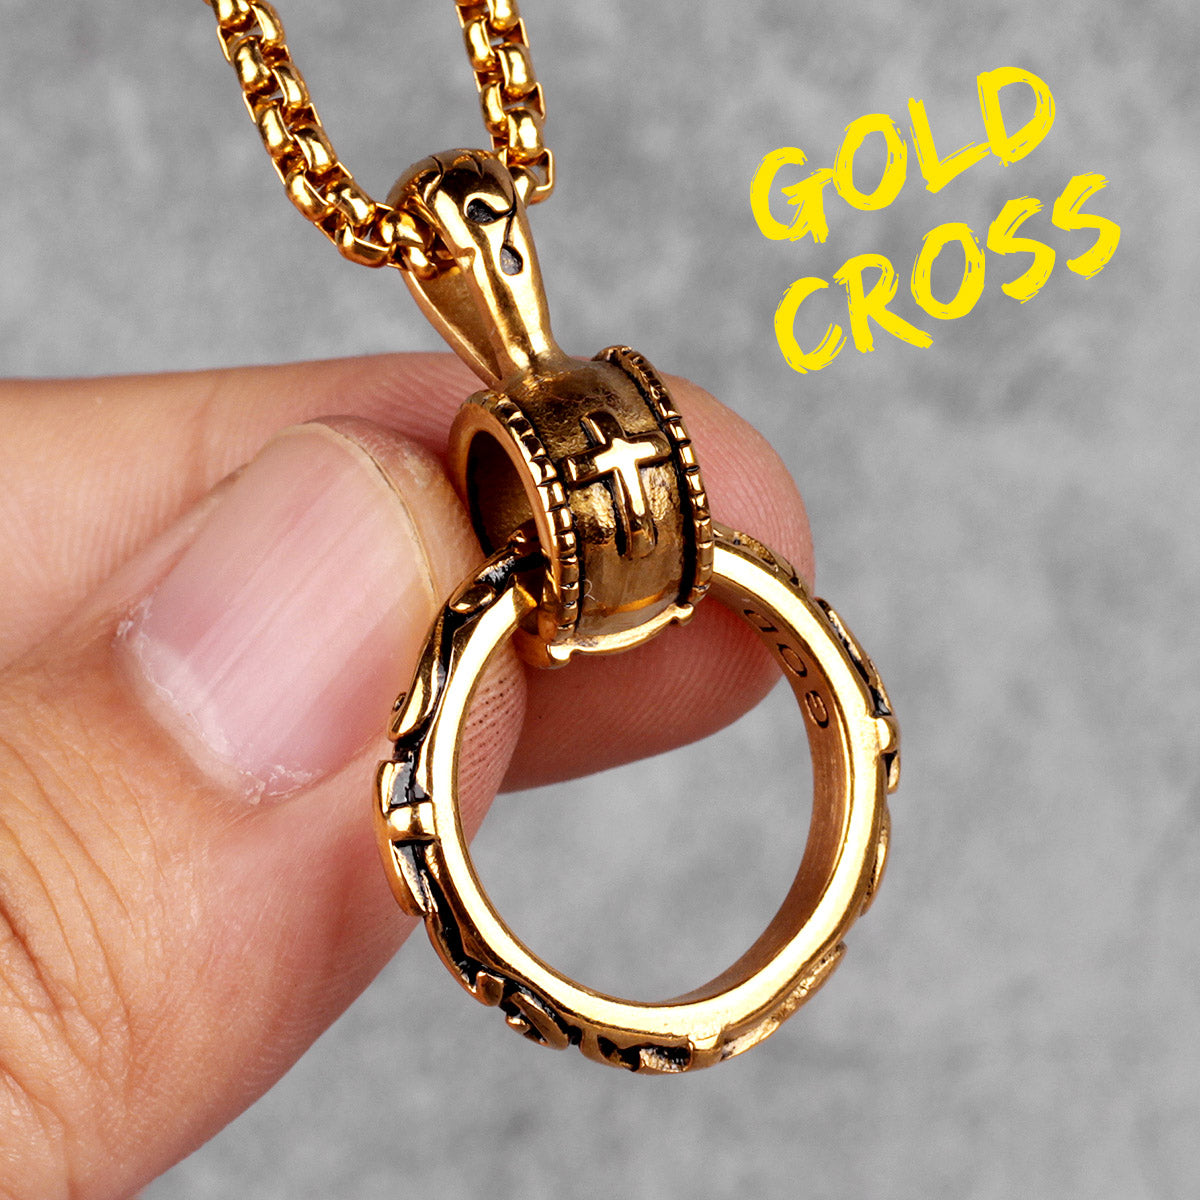 Christian Immortal Circle Pendant Cross Men's Titanium Steel Necklace Gift